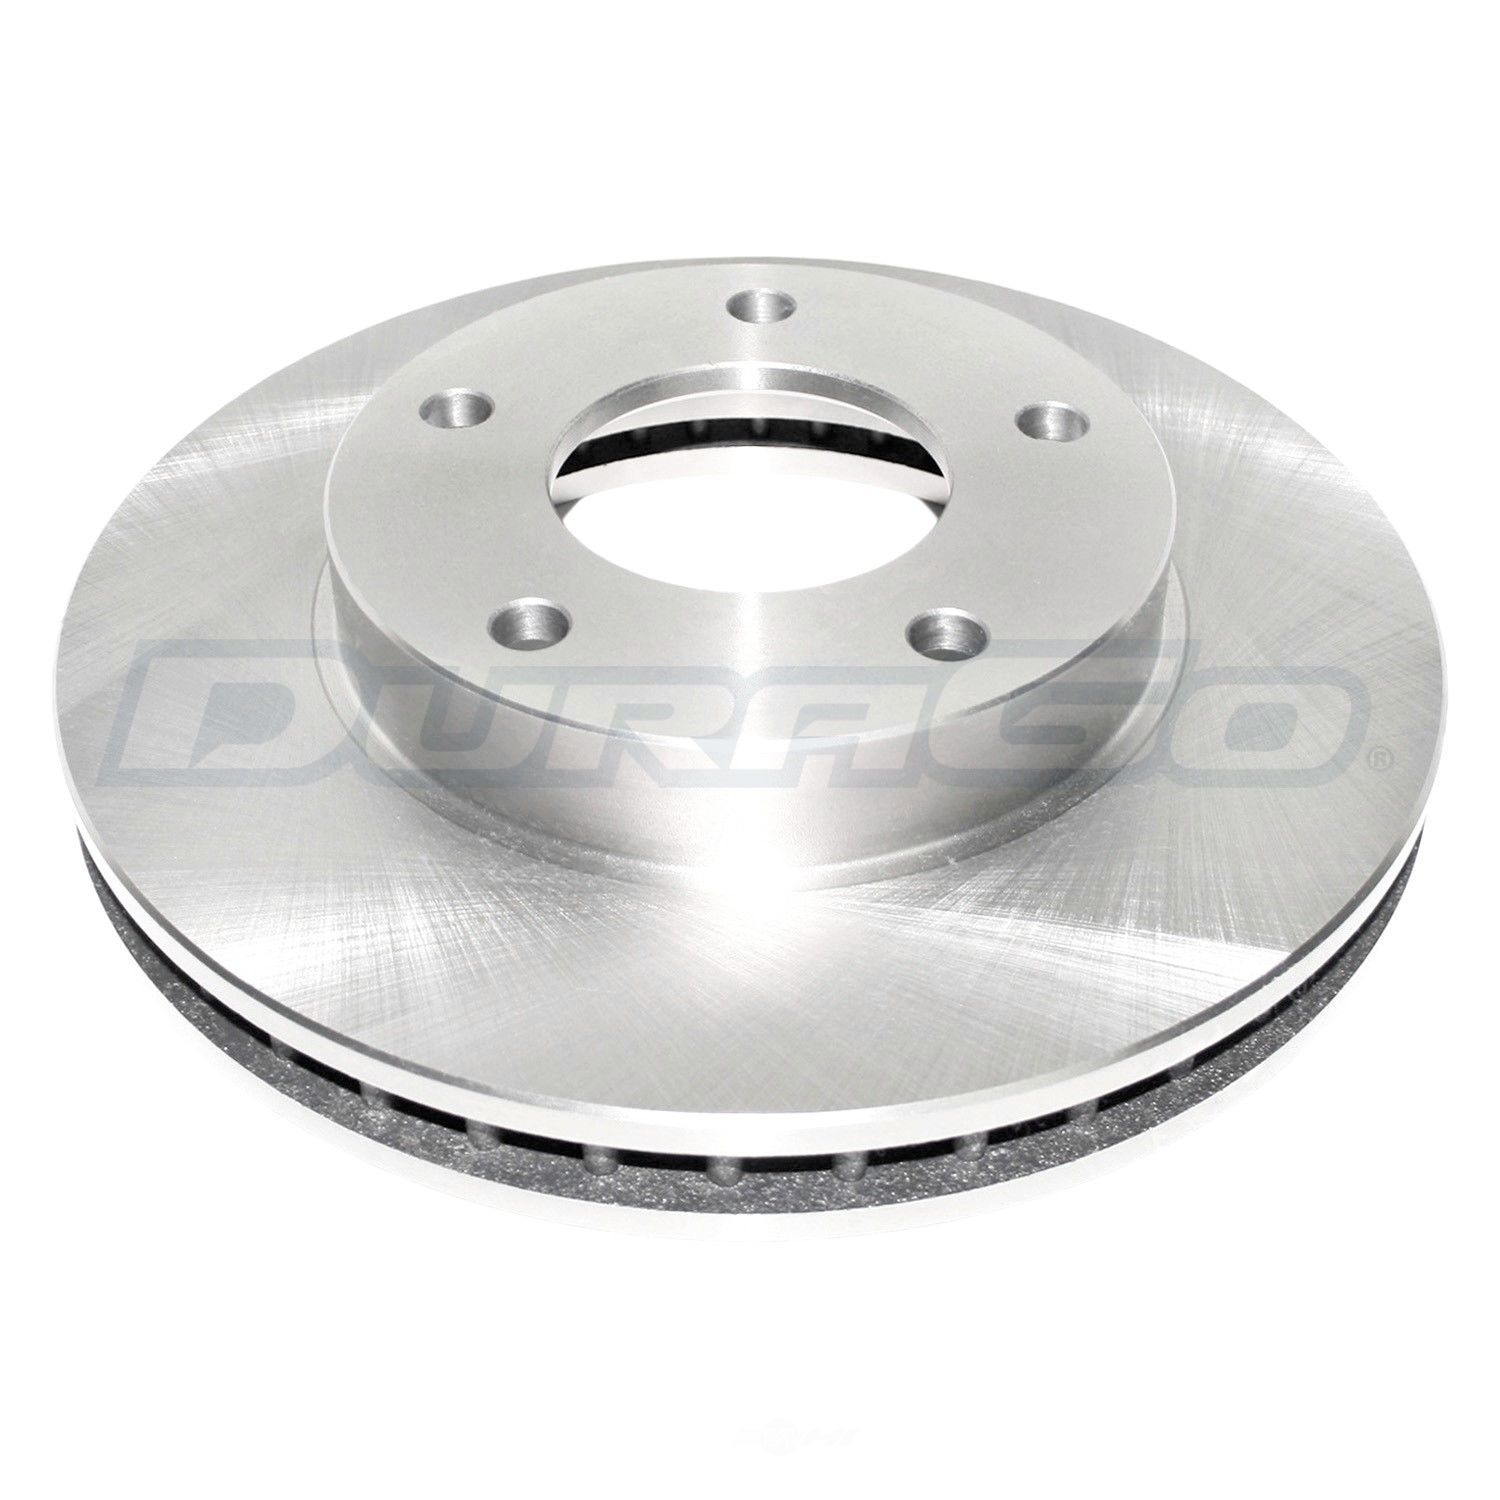 DURAGO - Disc Brake Rotor - D48 BR5512